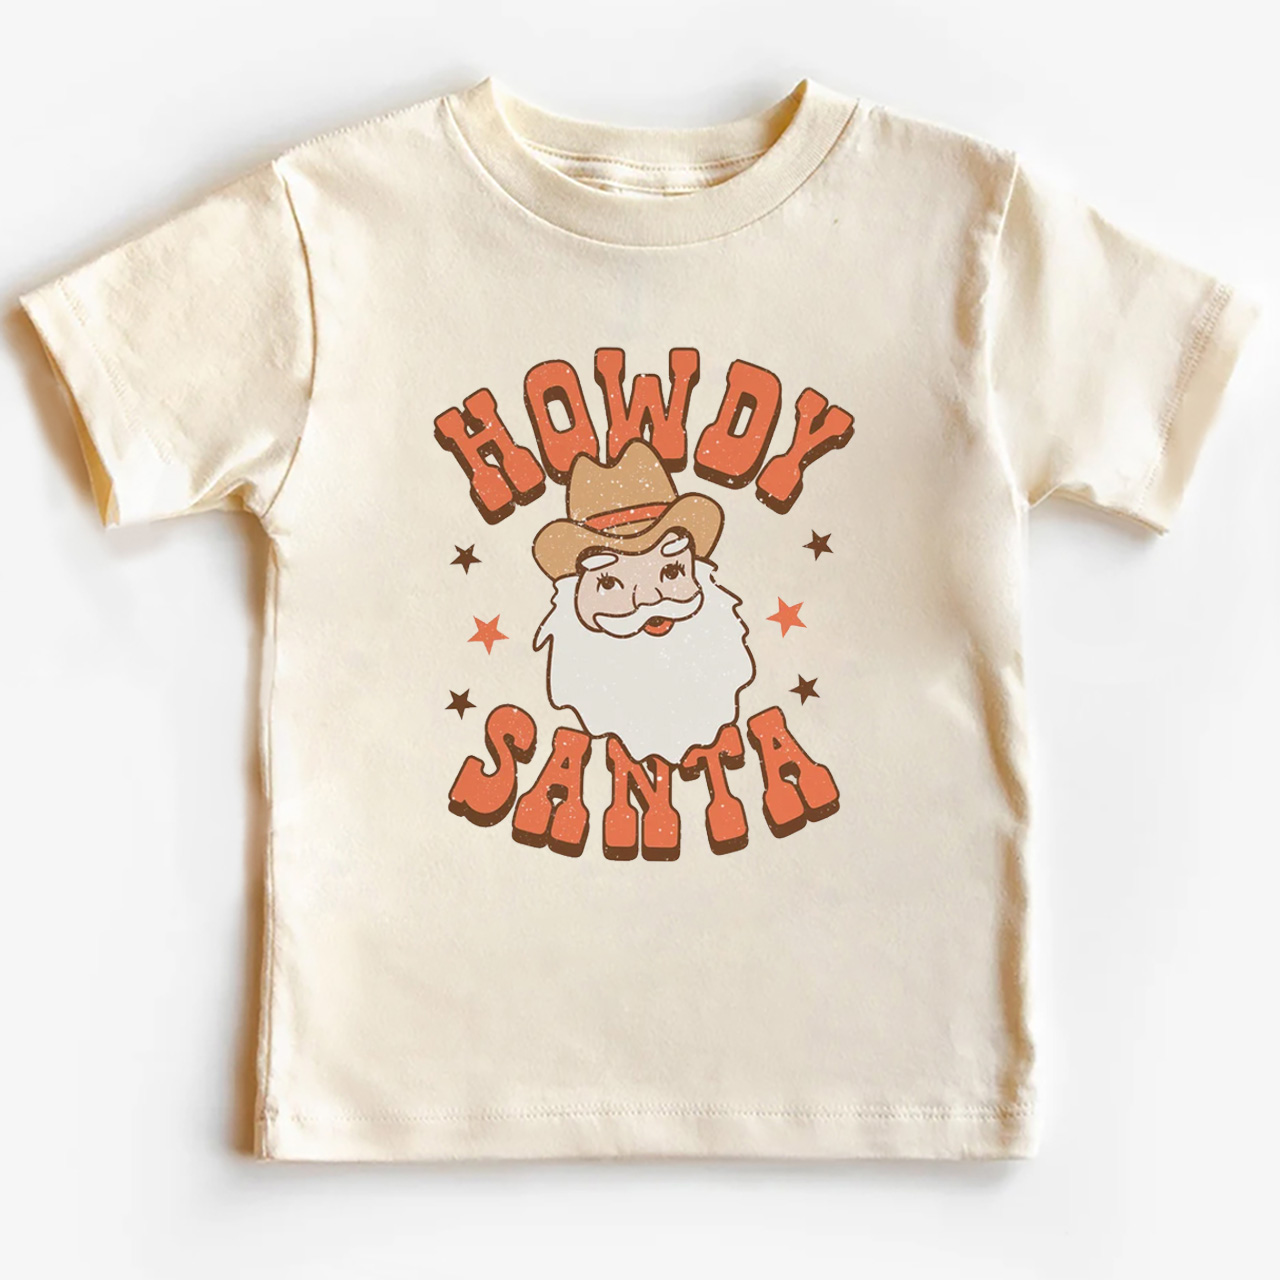 Toddler Christmas Shirt - Howdy Santa